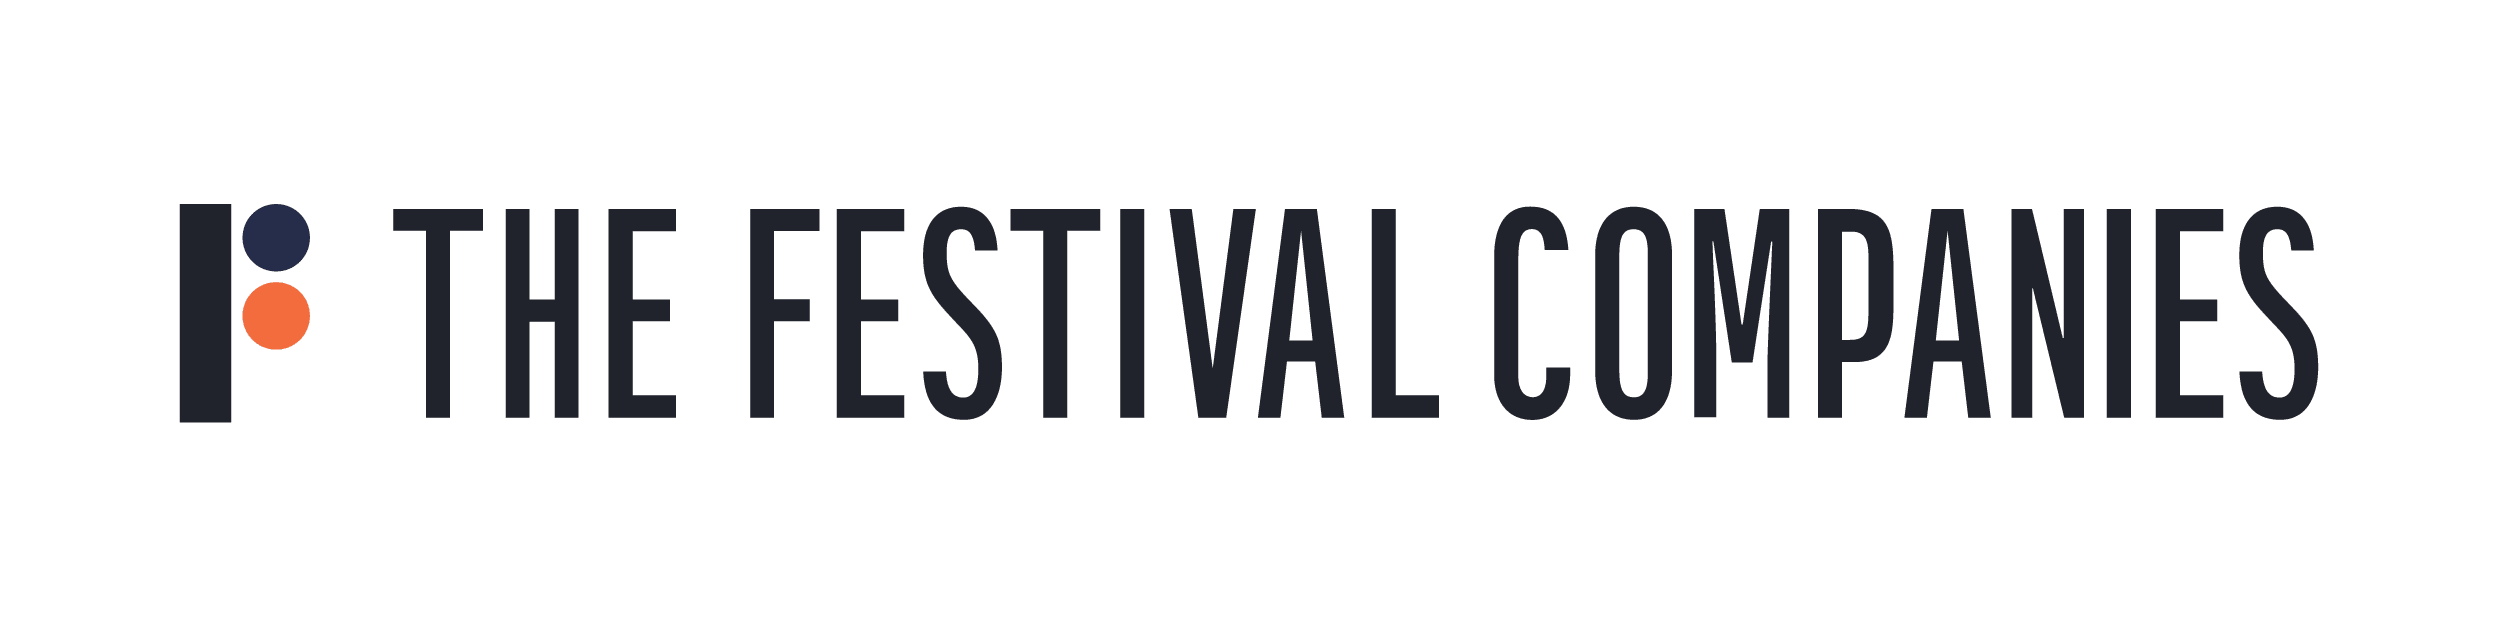 The Festival Companies